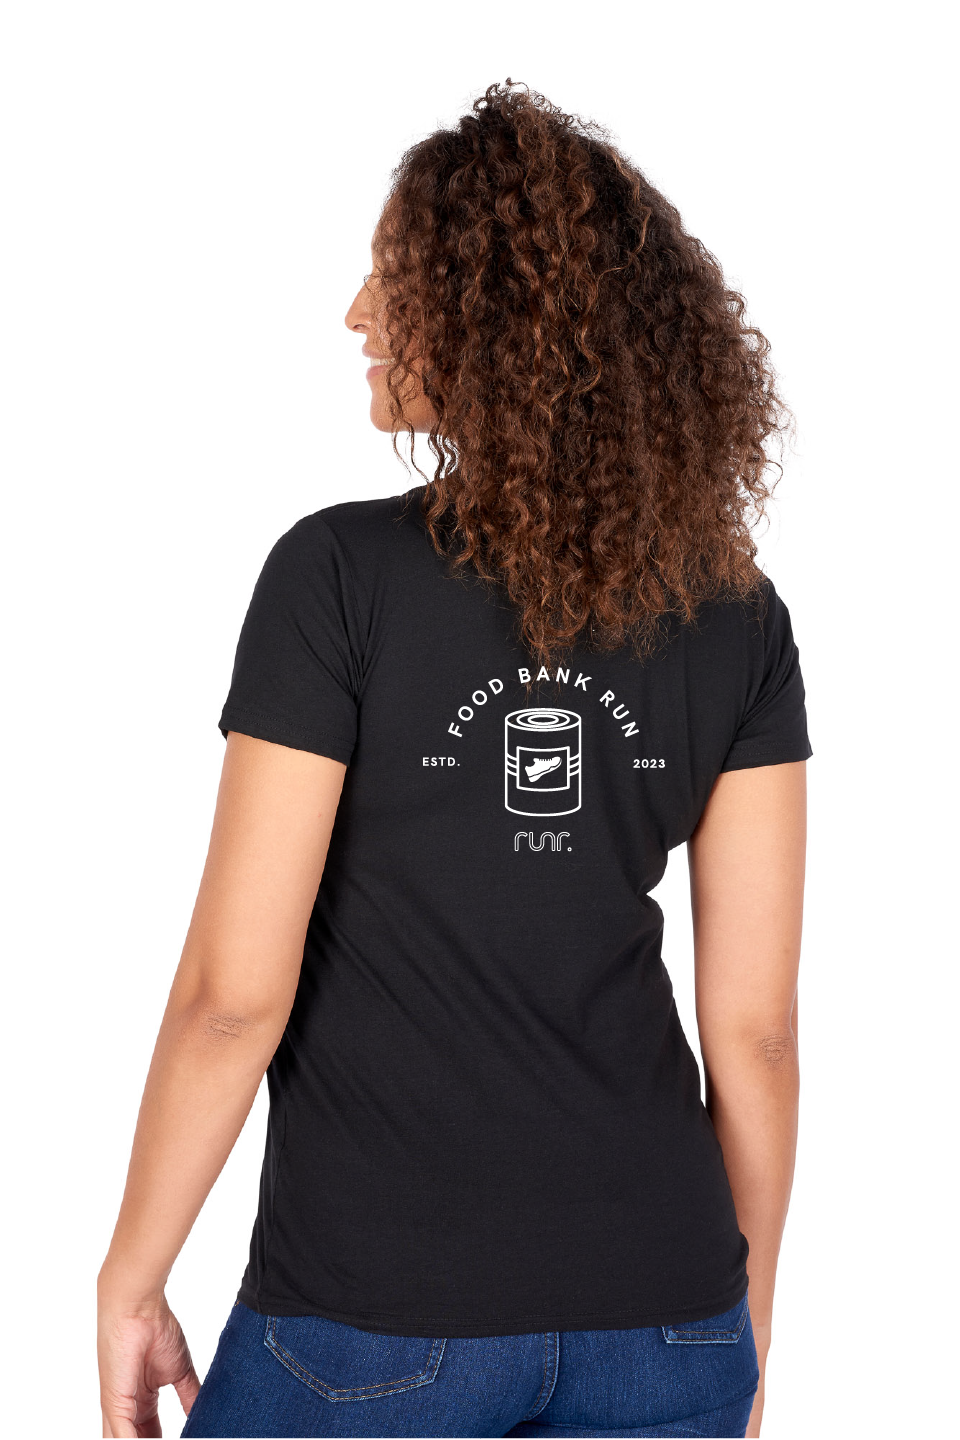 The Food Bank Run Women's T-shirt